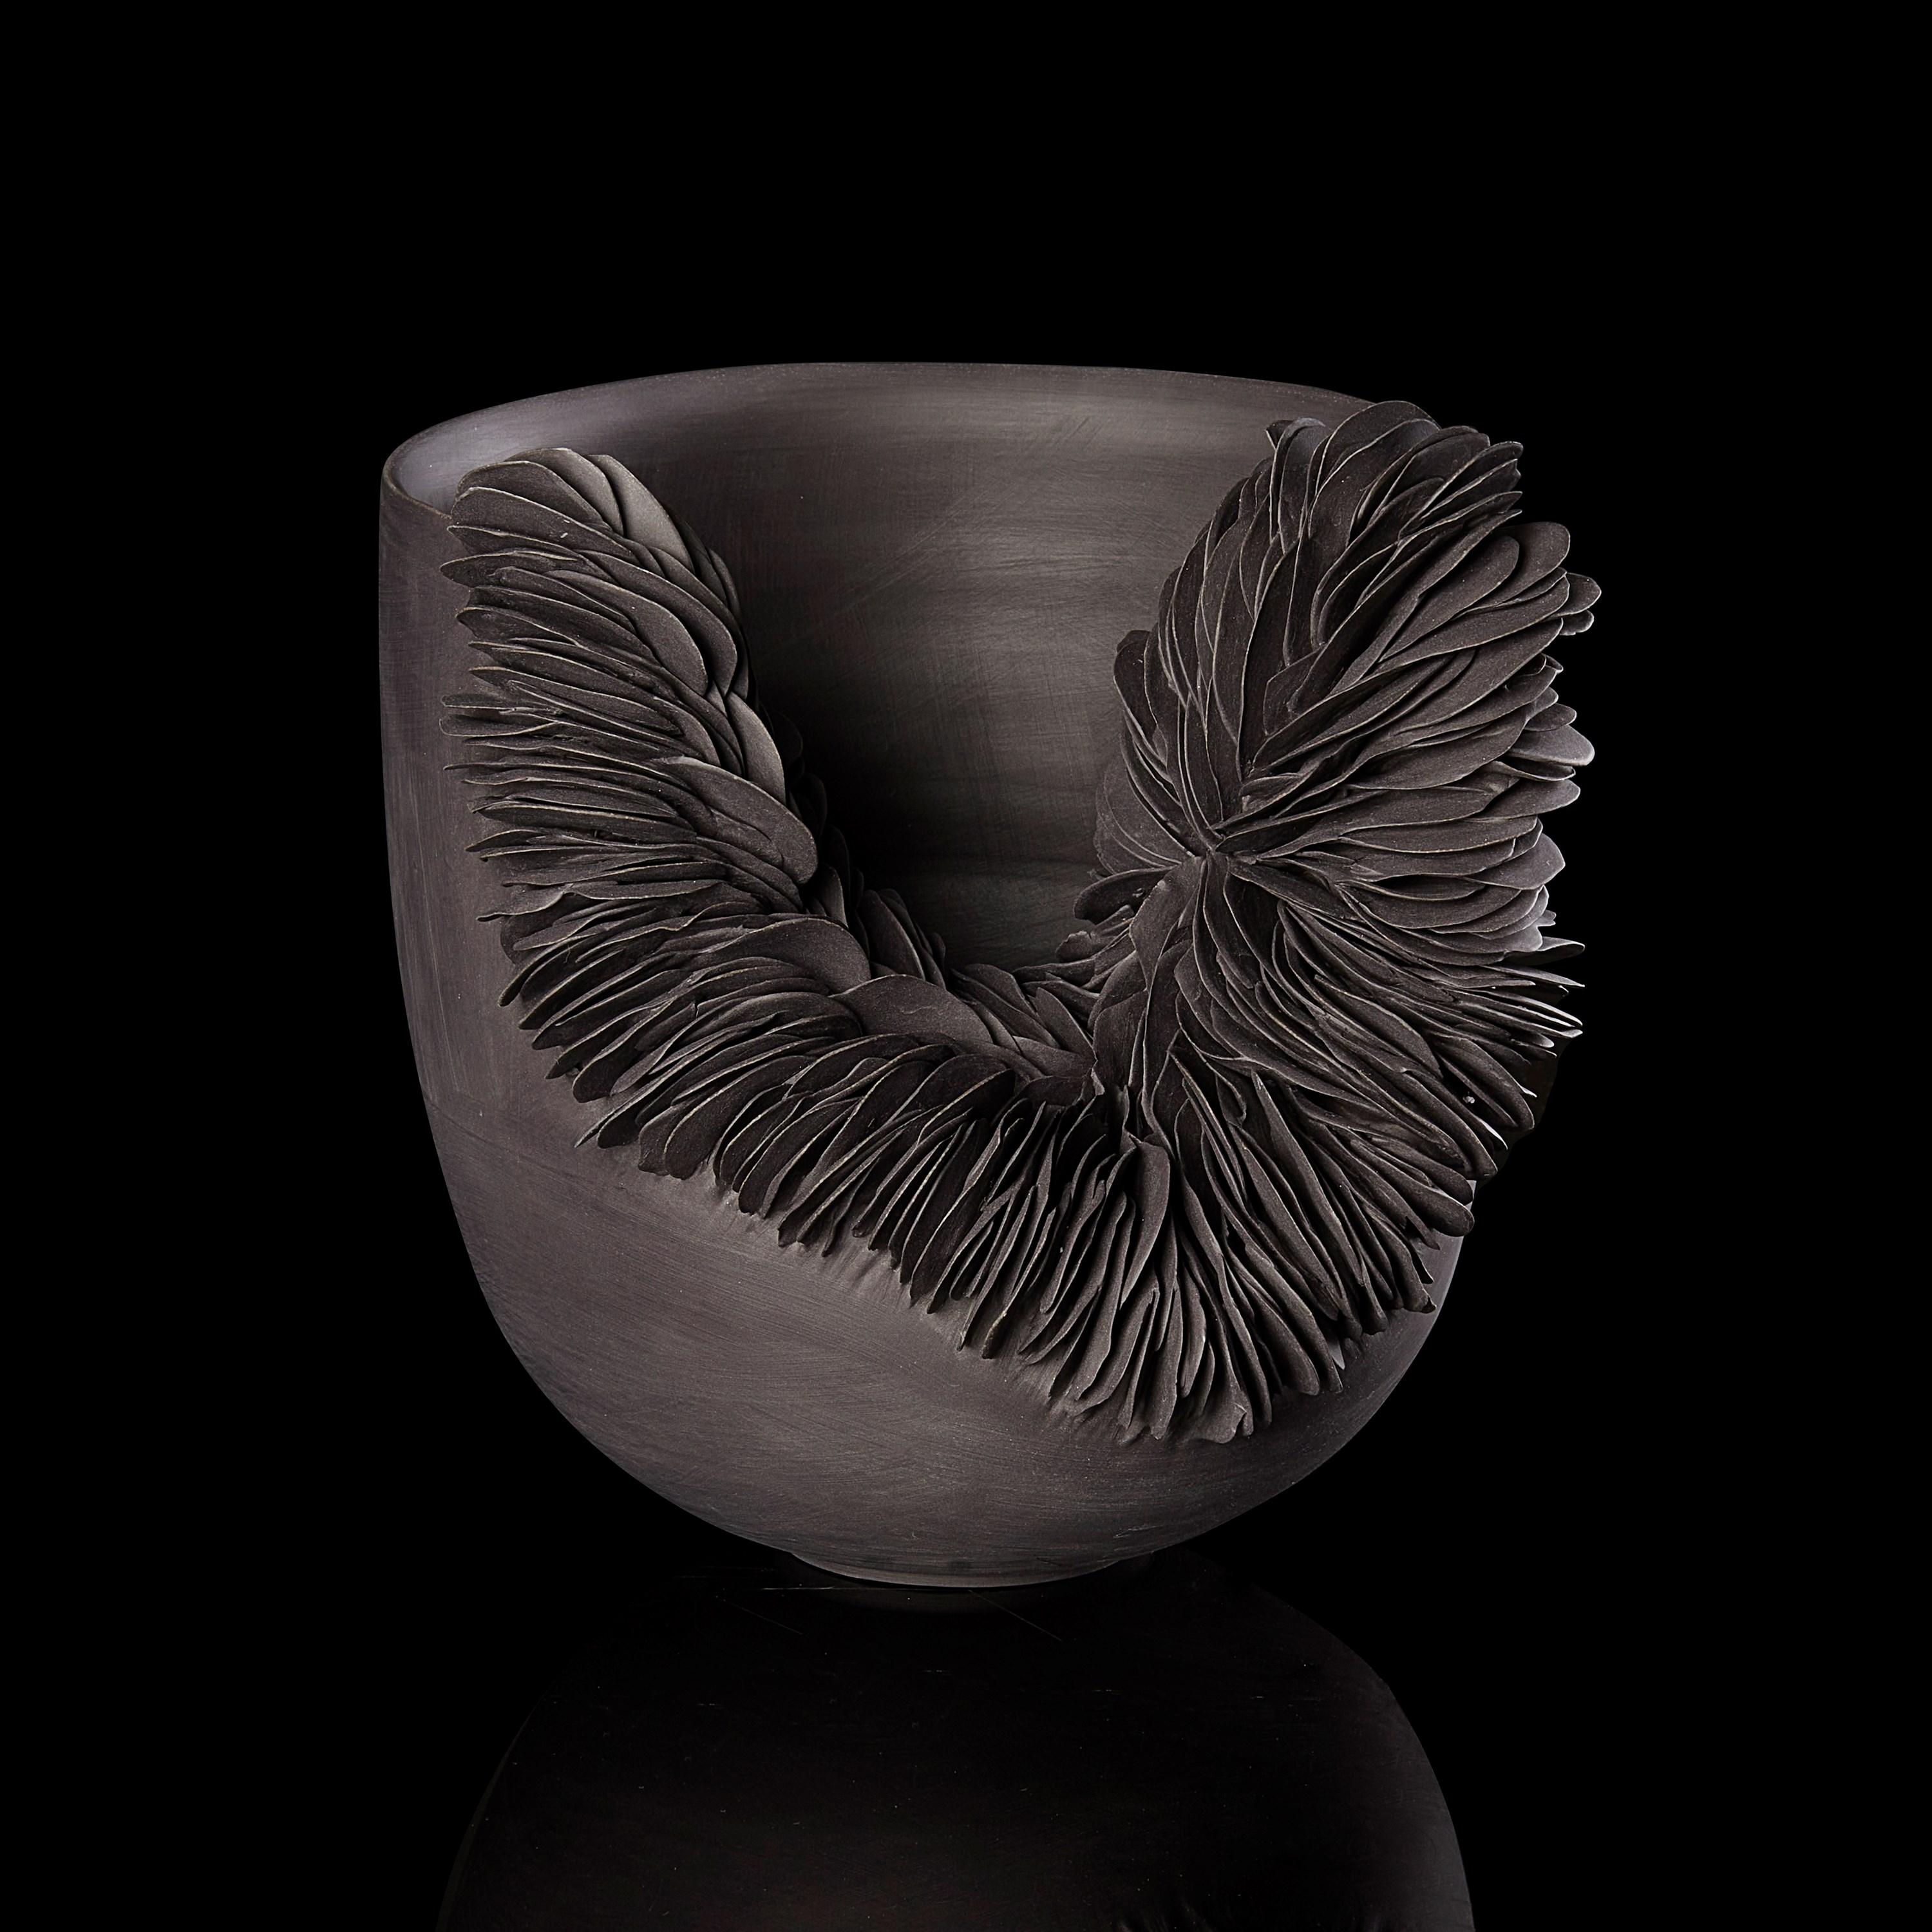 Hand-Crafted Black Collapsed Bowl, textured porcelain sculptural vessel by Olivia Walker For Sale